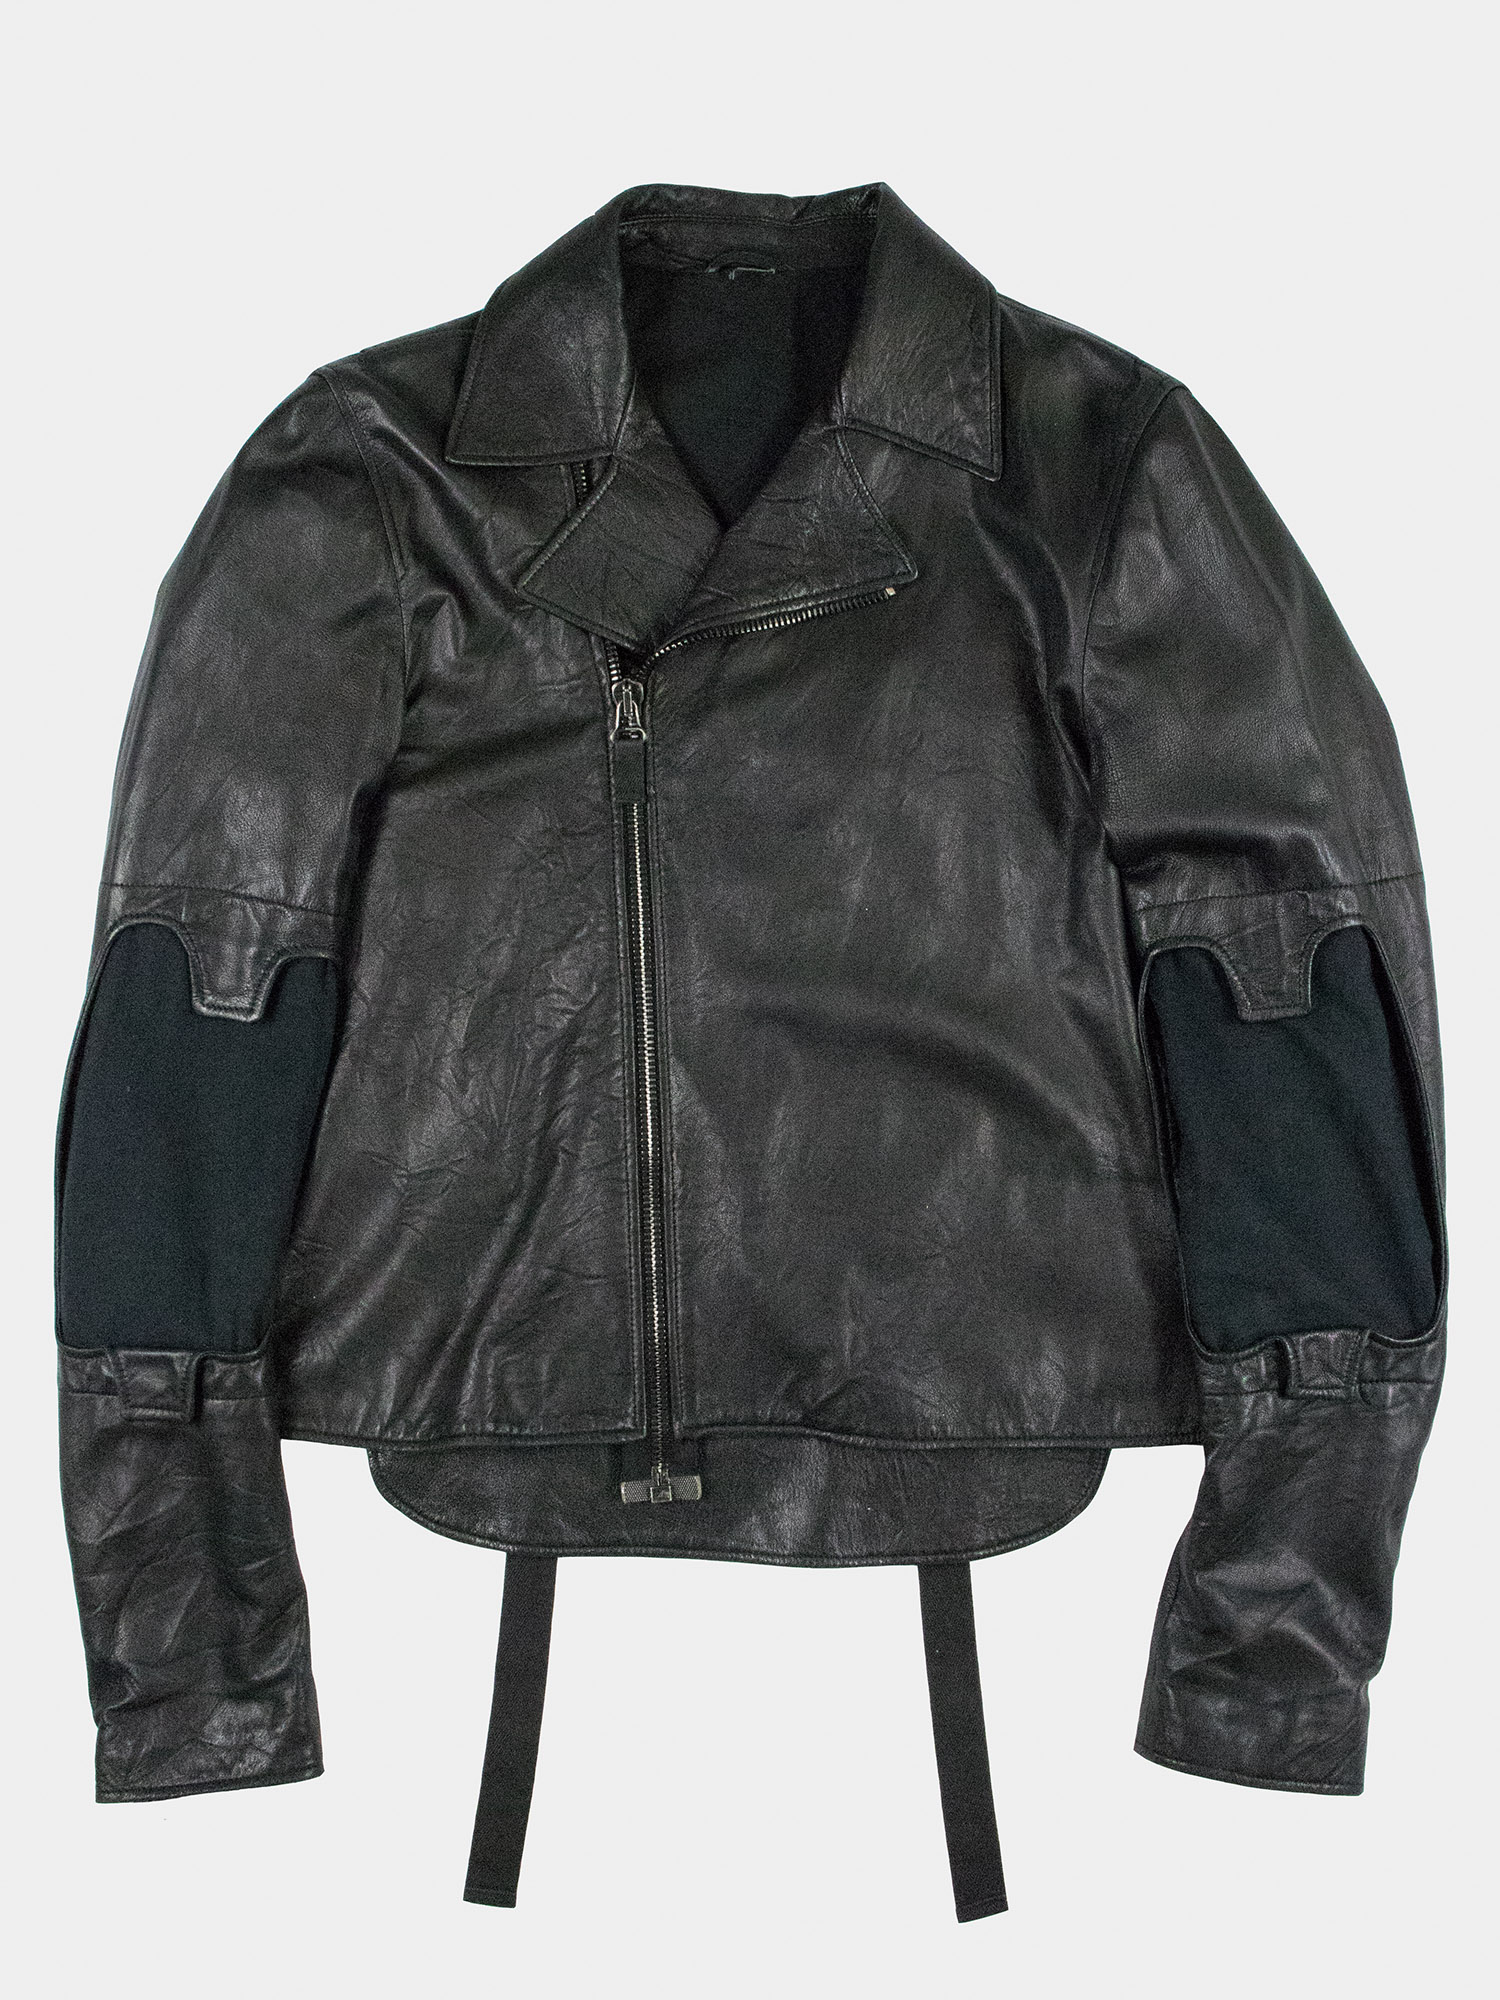 Helmut Lang Archive 04ss biker jacket